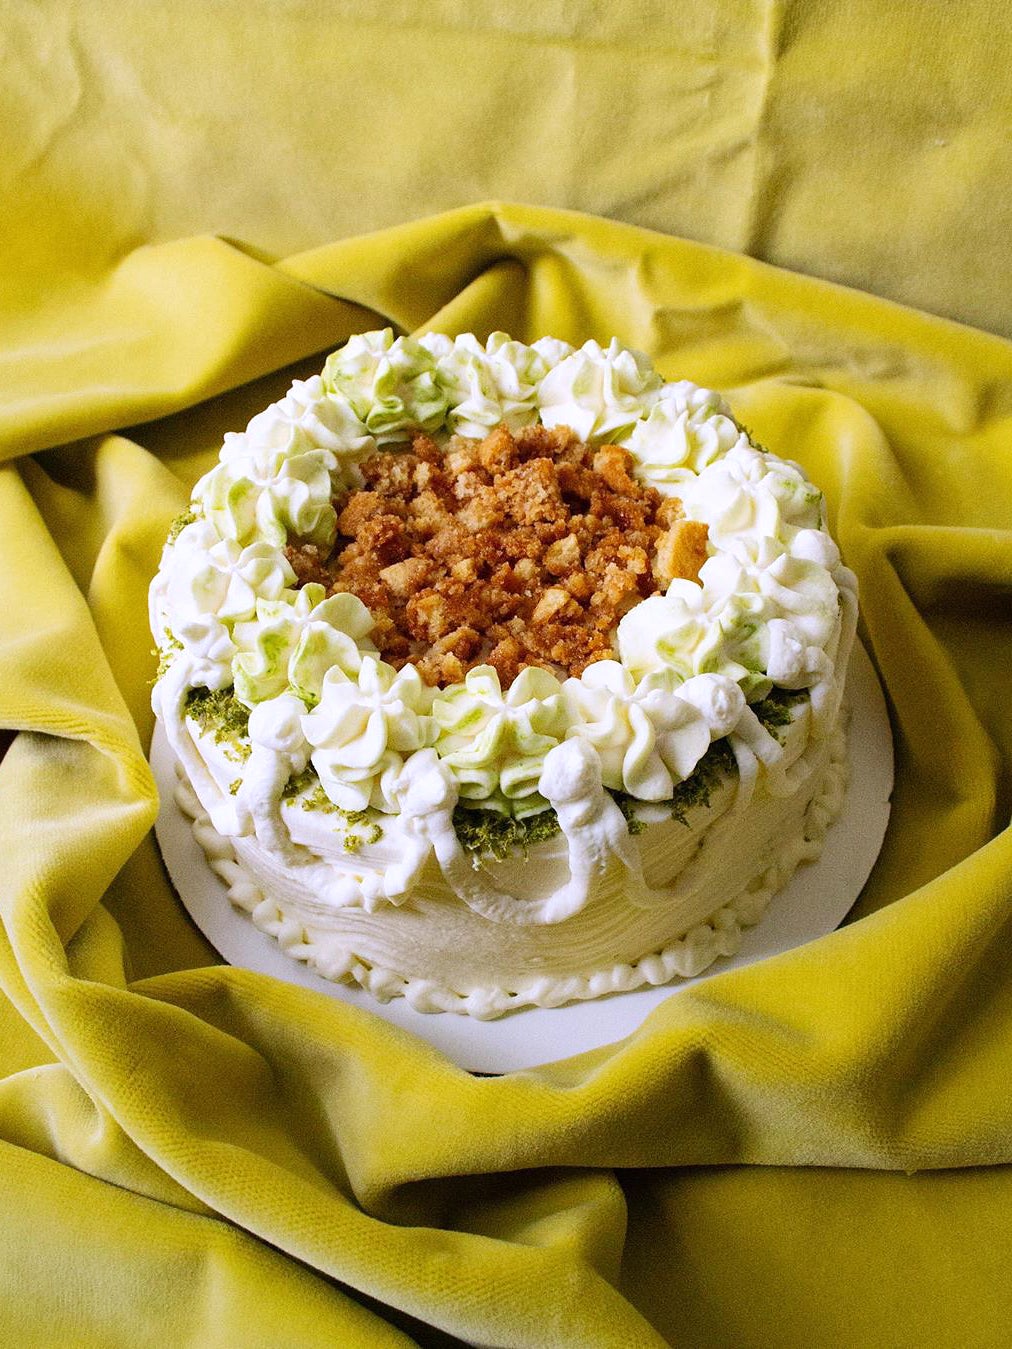 White cake against yellow background